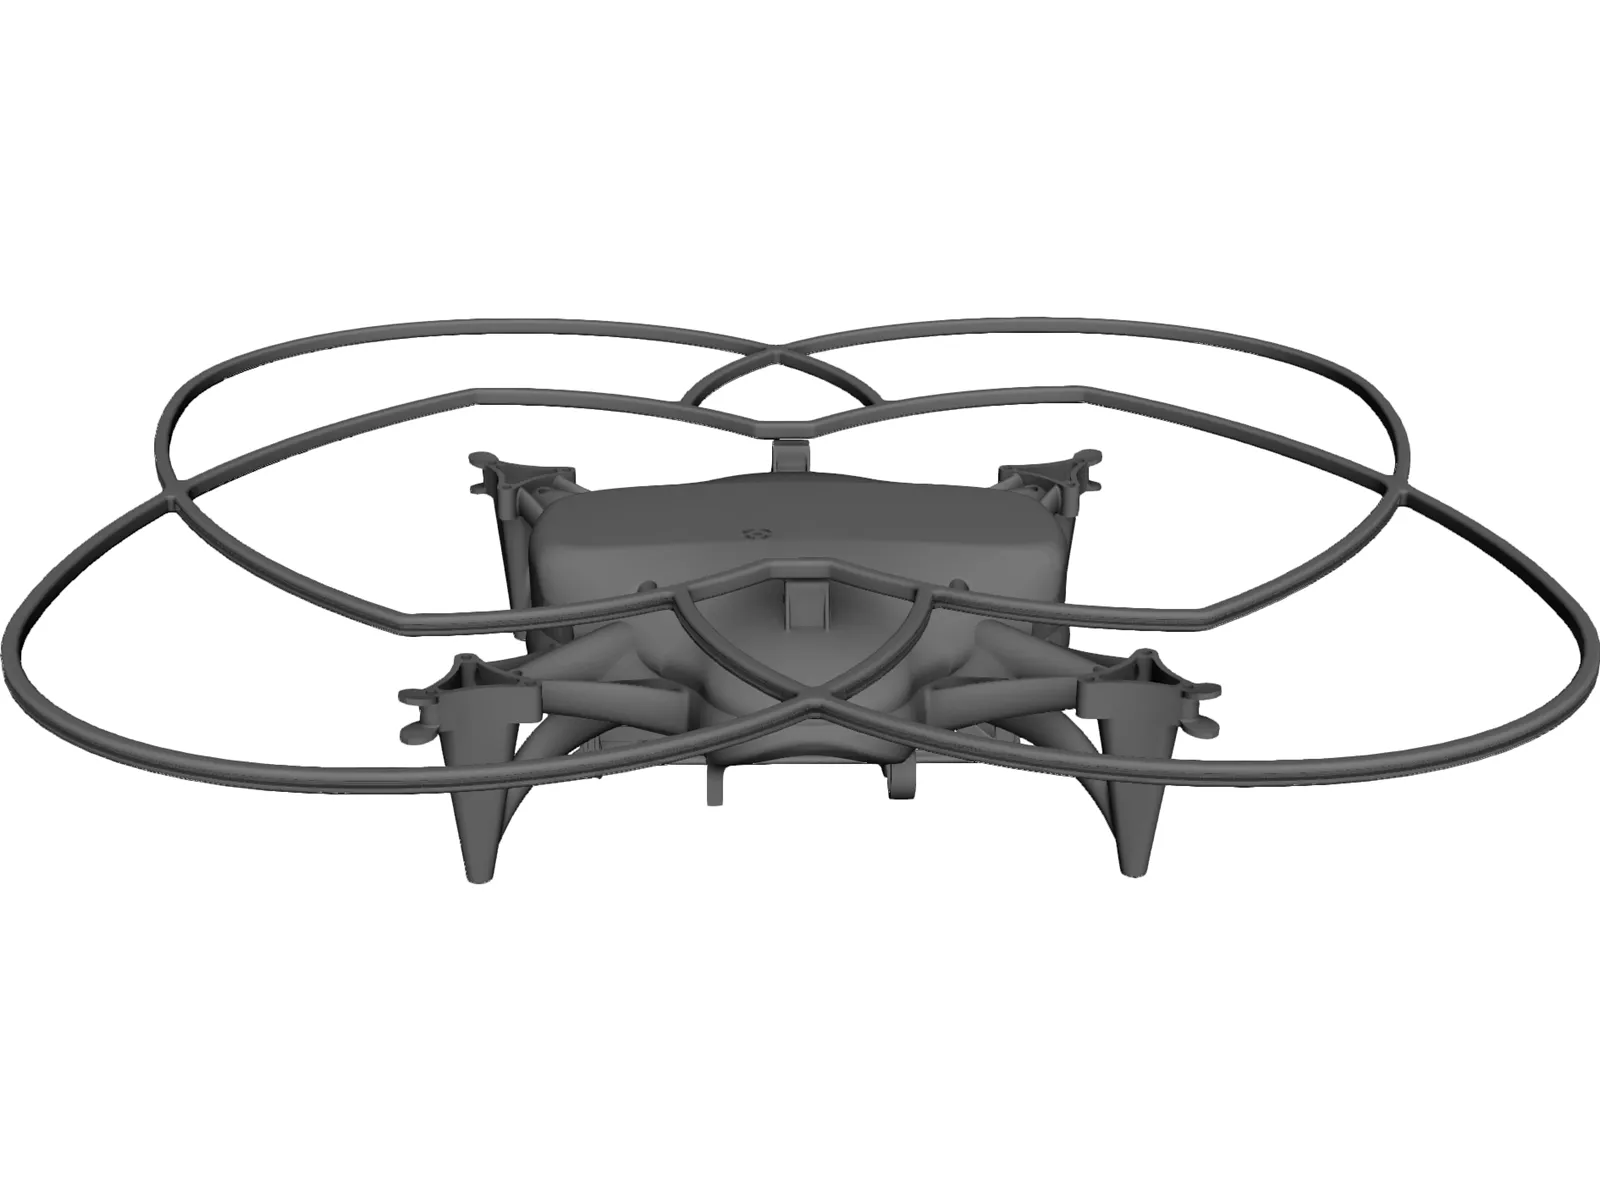 Quadrocopter Body CAD Model - 3DCADBrowser